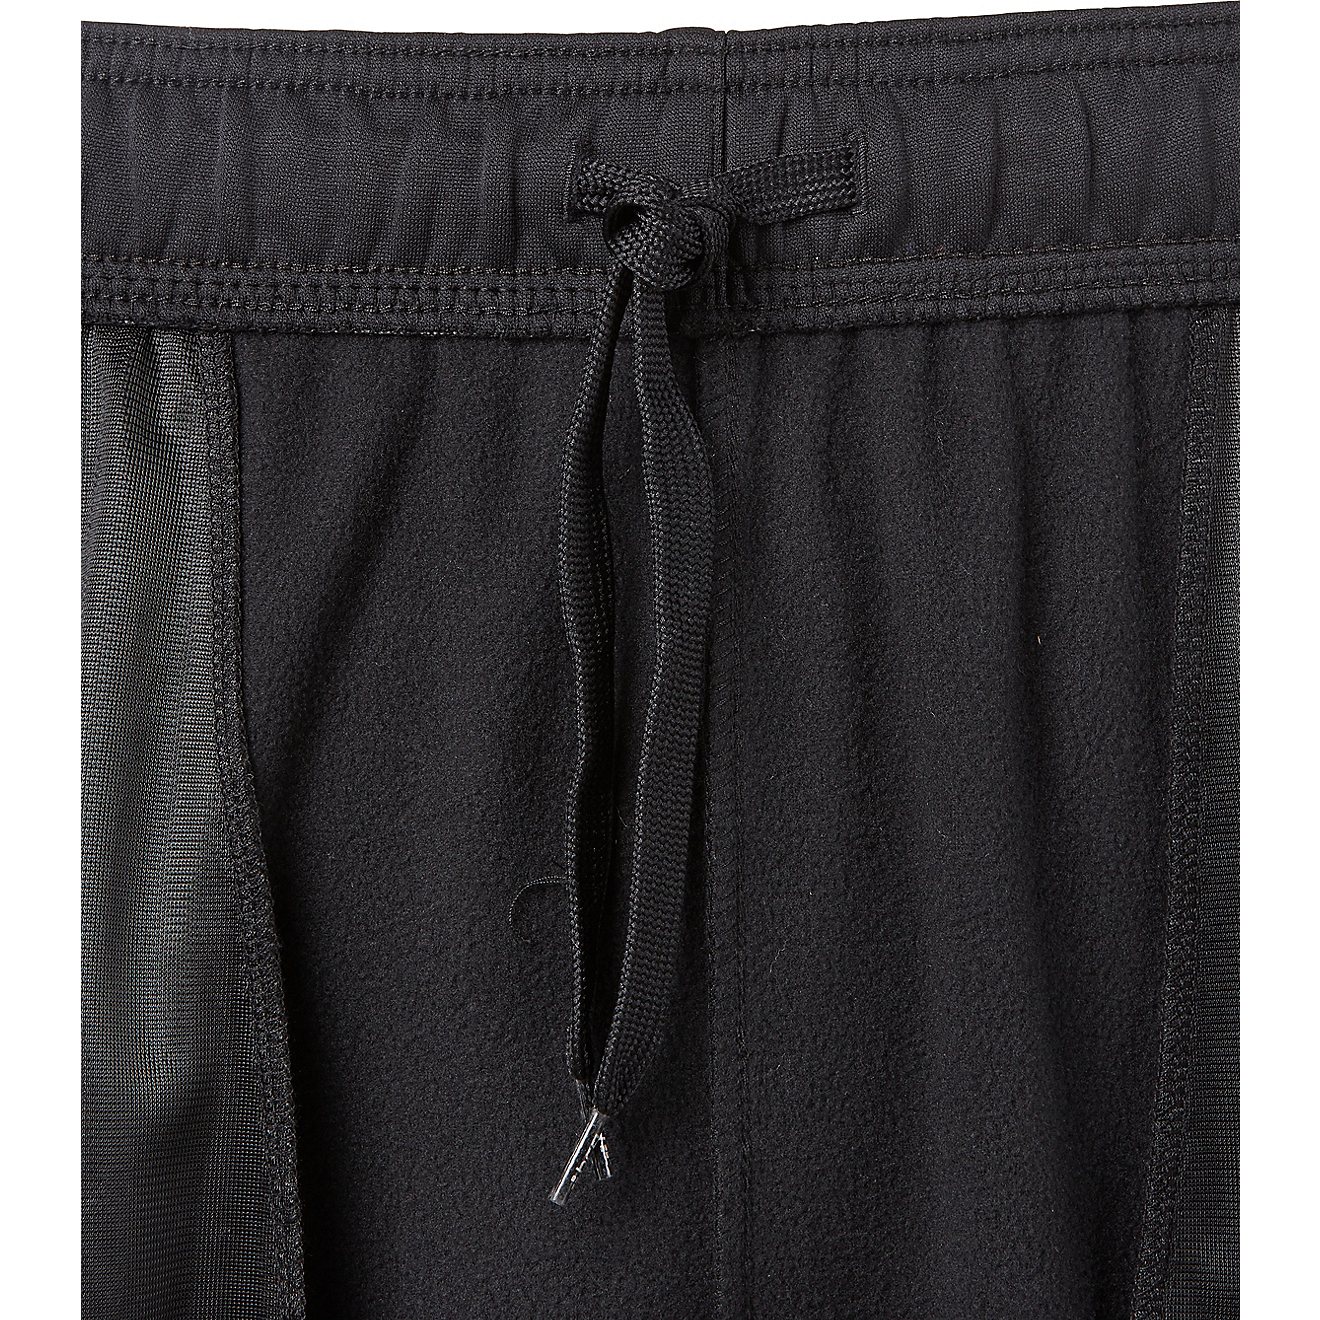 BCG Men's Athletic Performance Fleece Pants | Academy